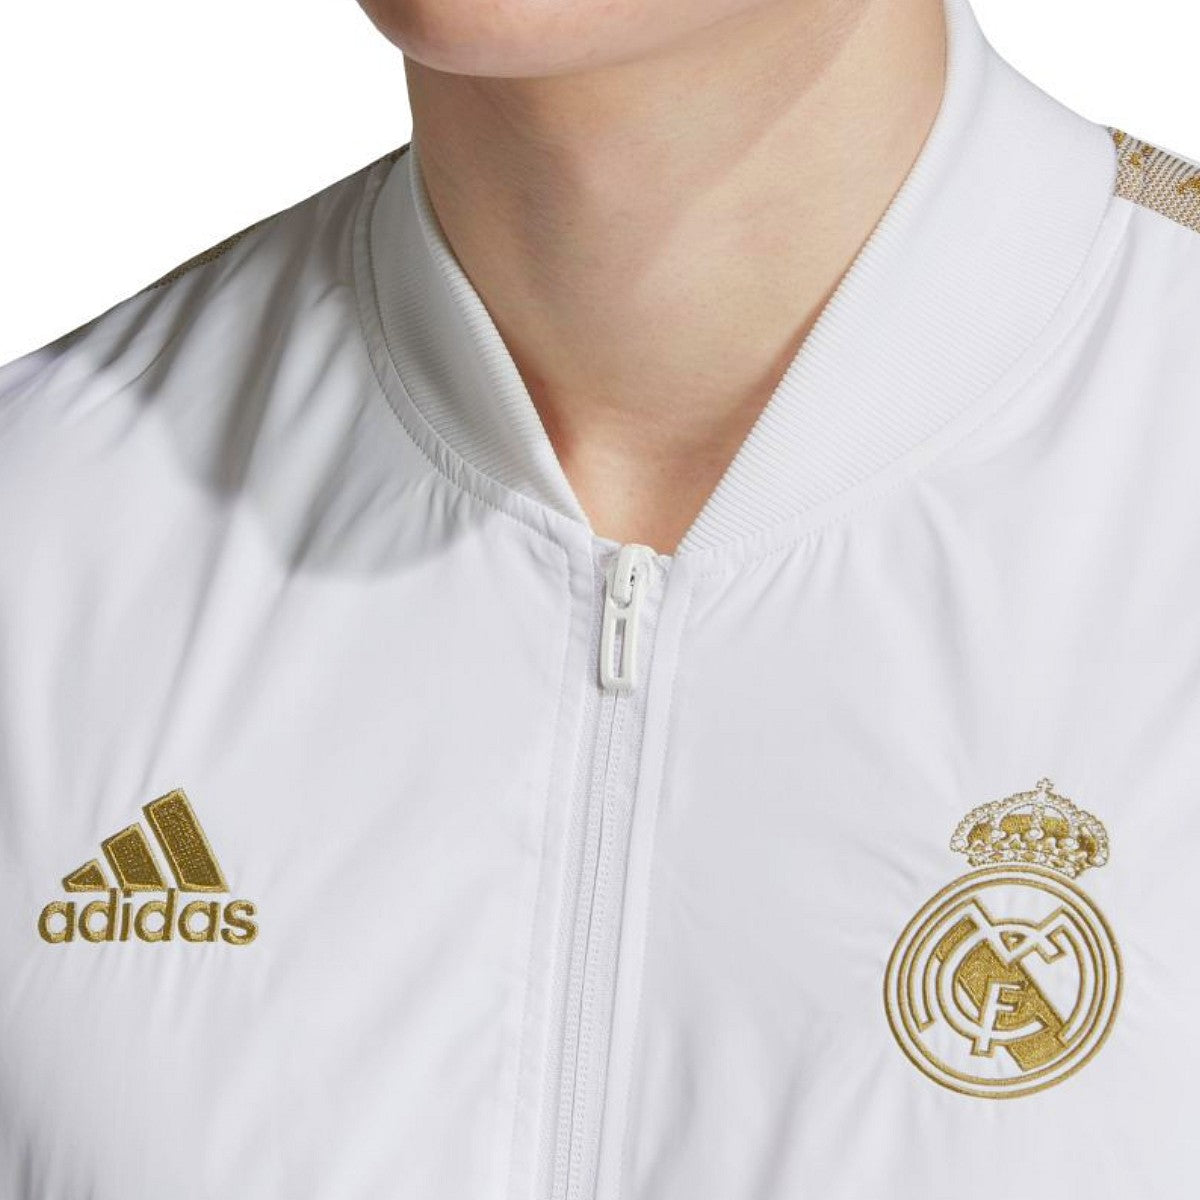 Taxi ego En marcha Real Madrid Anthem presentation jacket 2019/20 - Adidas –  SoccerTracksuits.com